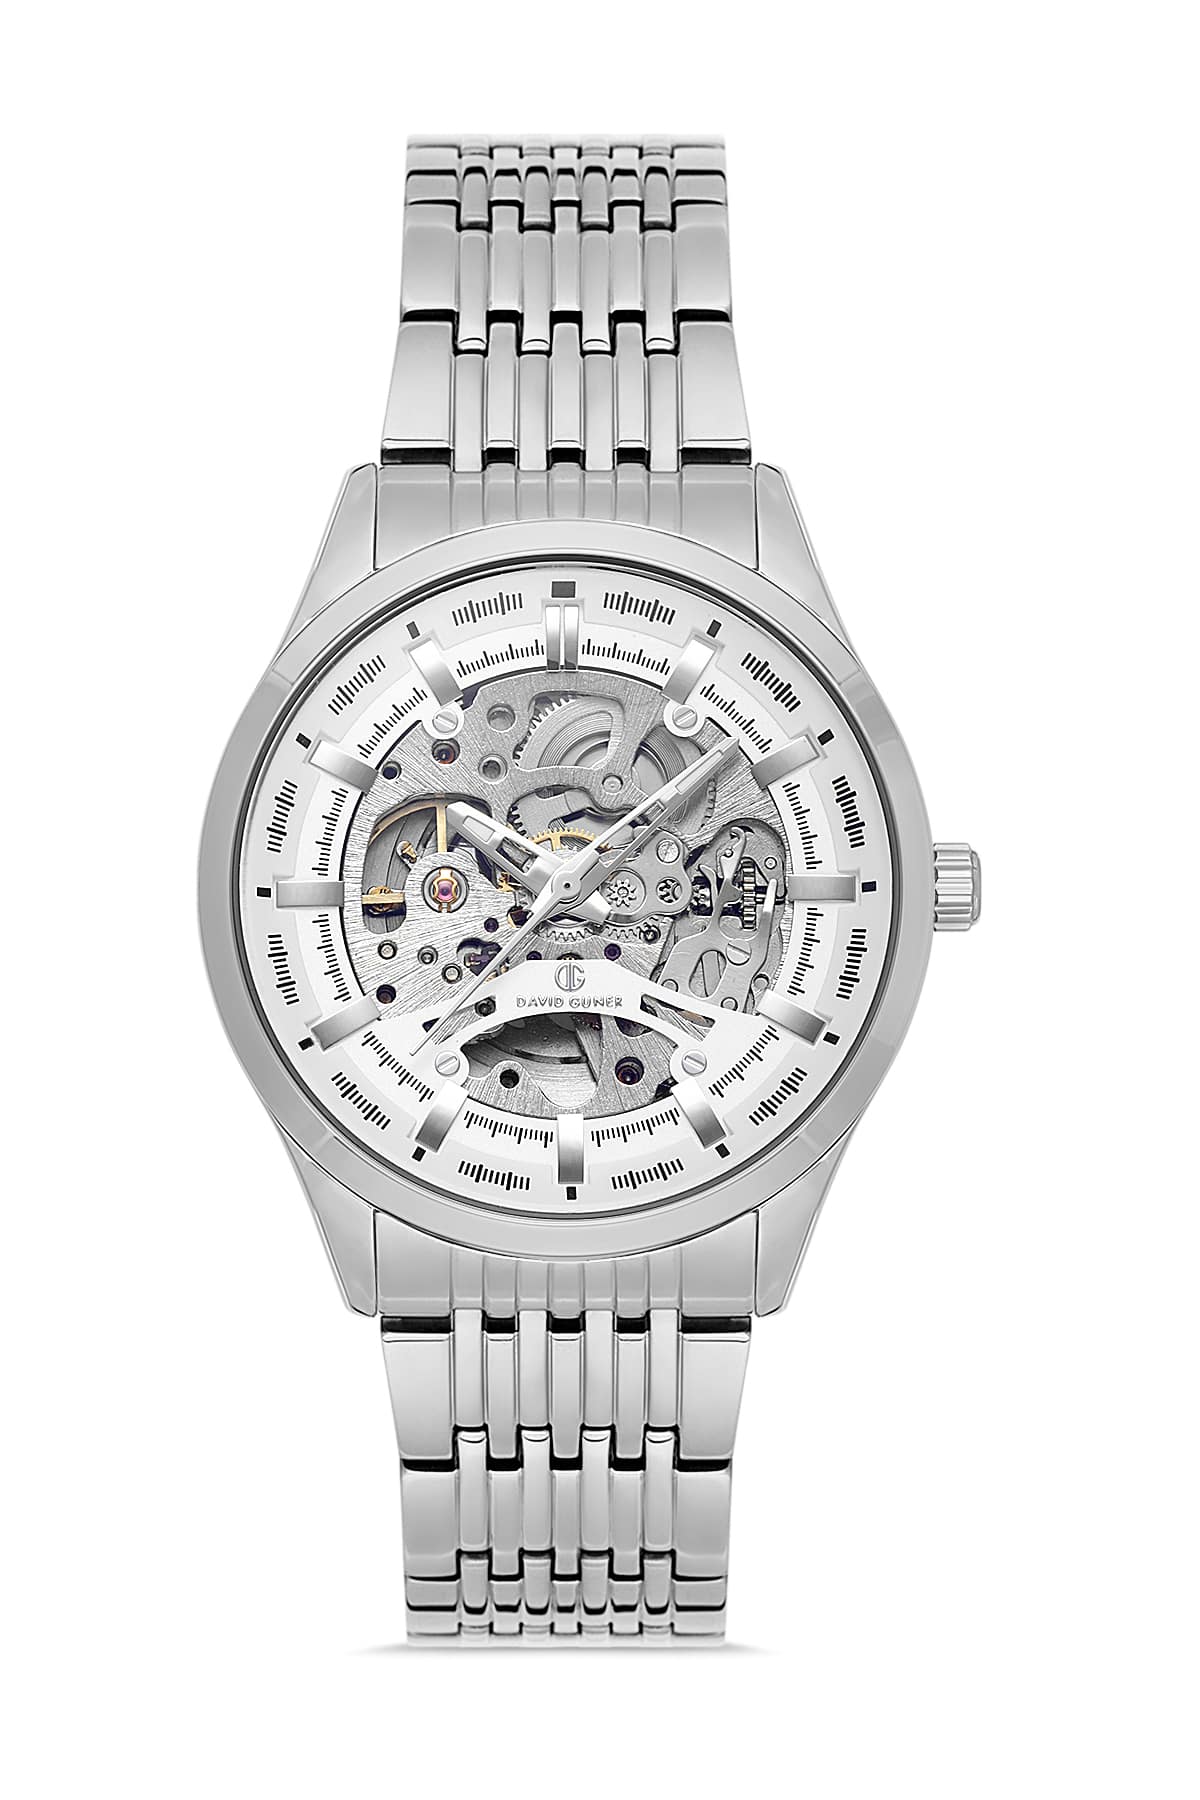 DAVID GUNER Silver Plated Automatic Function Men's Wristwatch